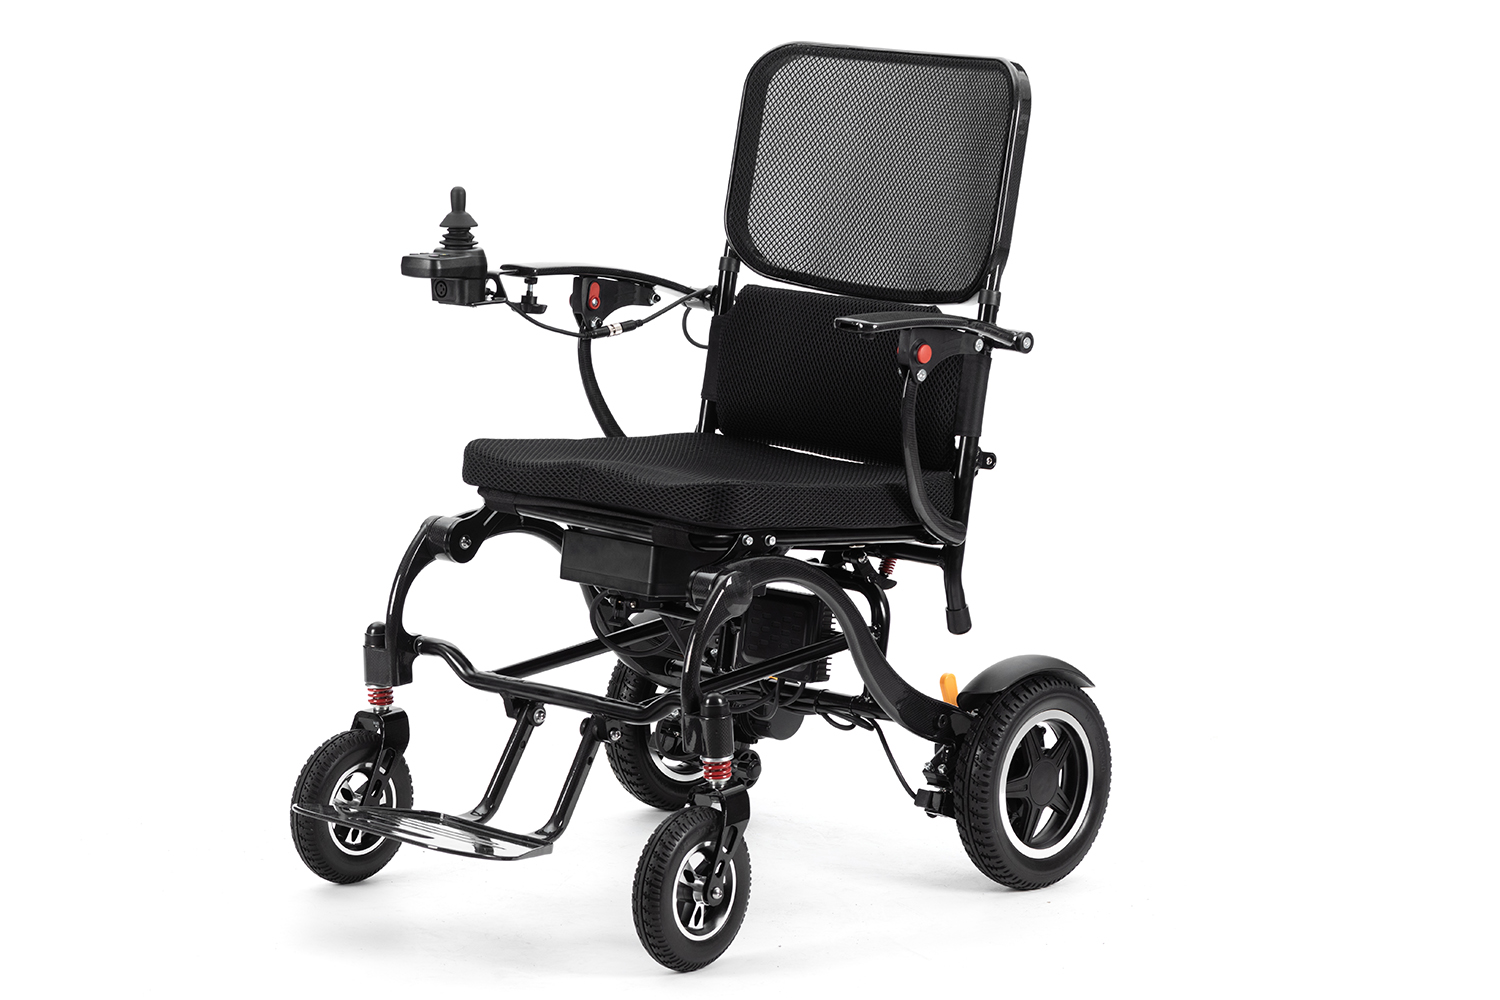 Lightest electric wheelchair —made of carbon fiber—Super light only 17kg